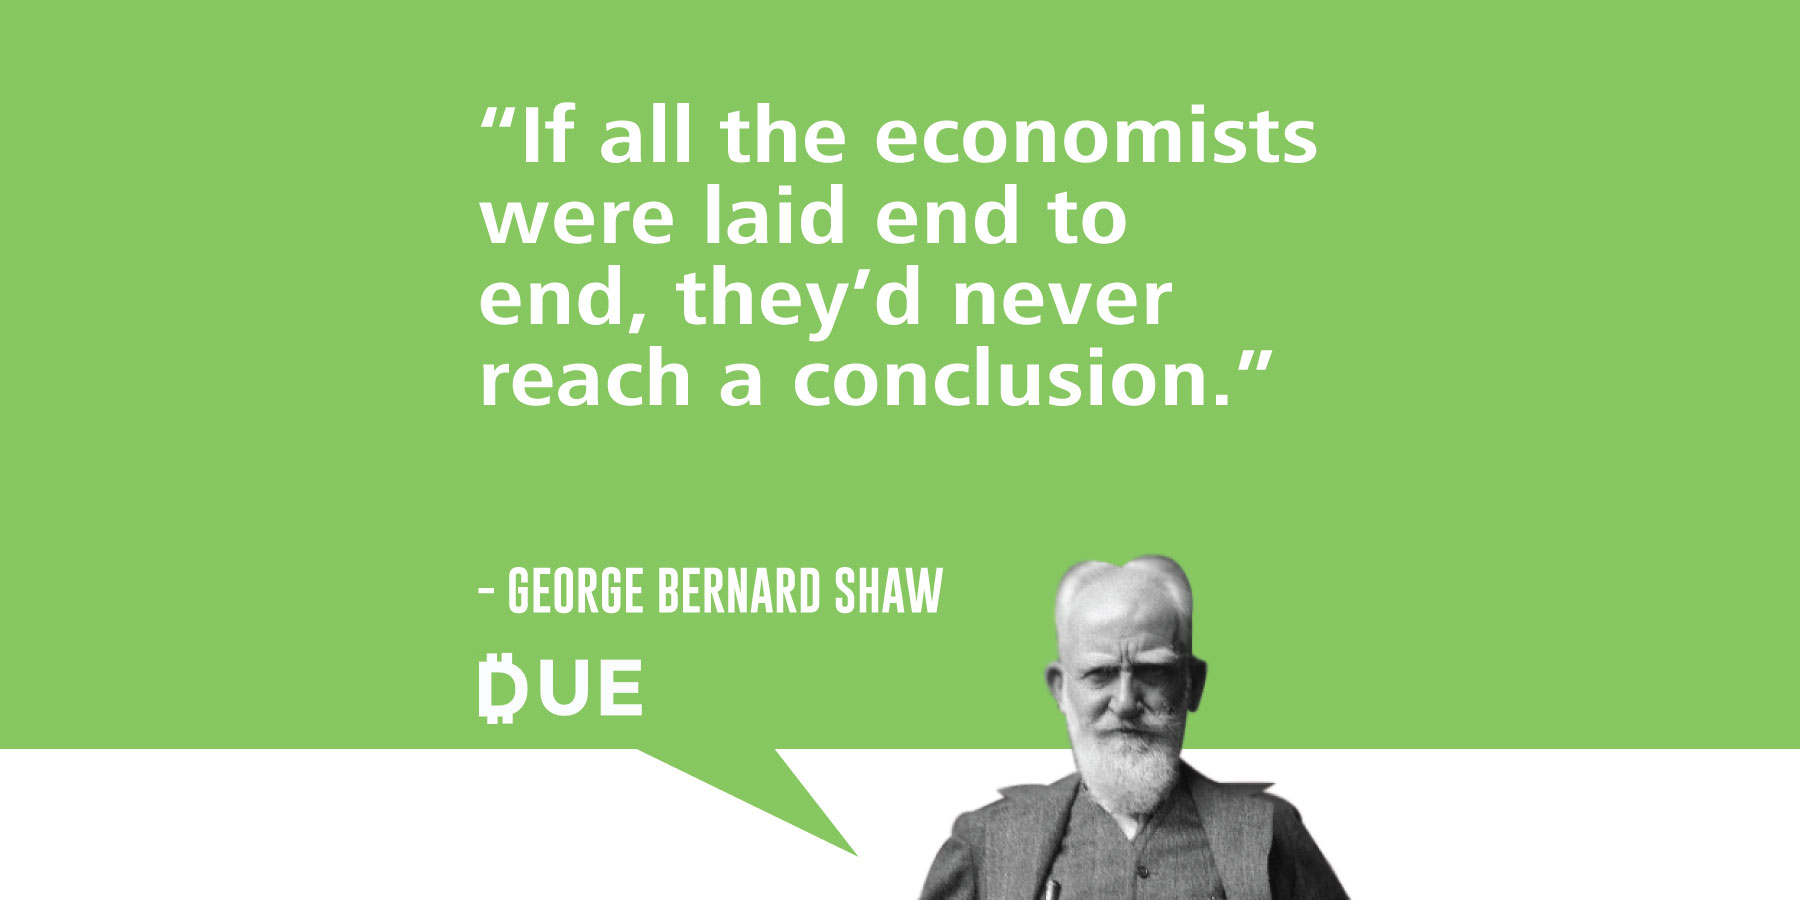 George Bernard Shaw - Economists Conclusions